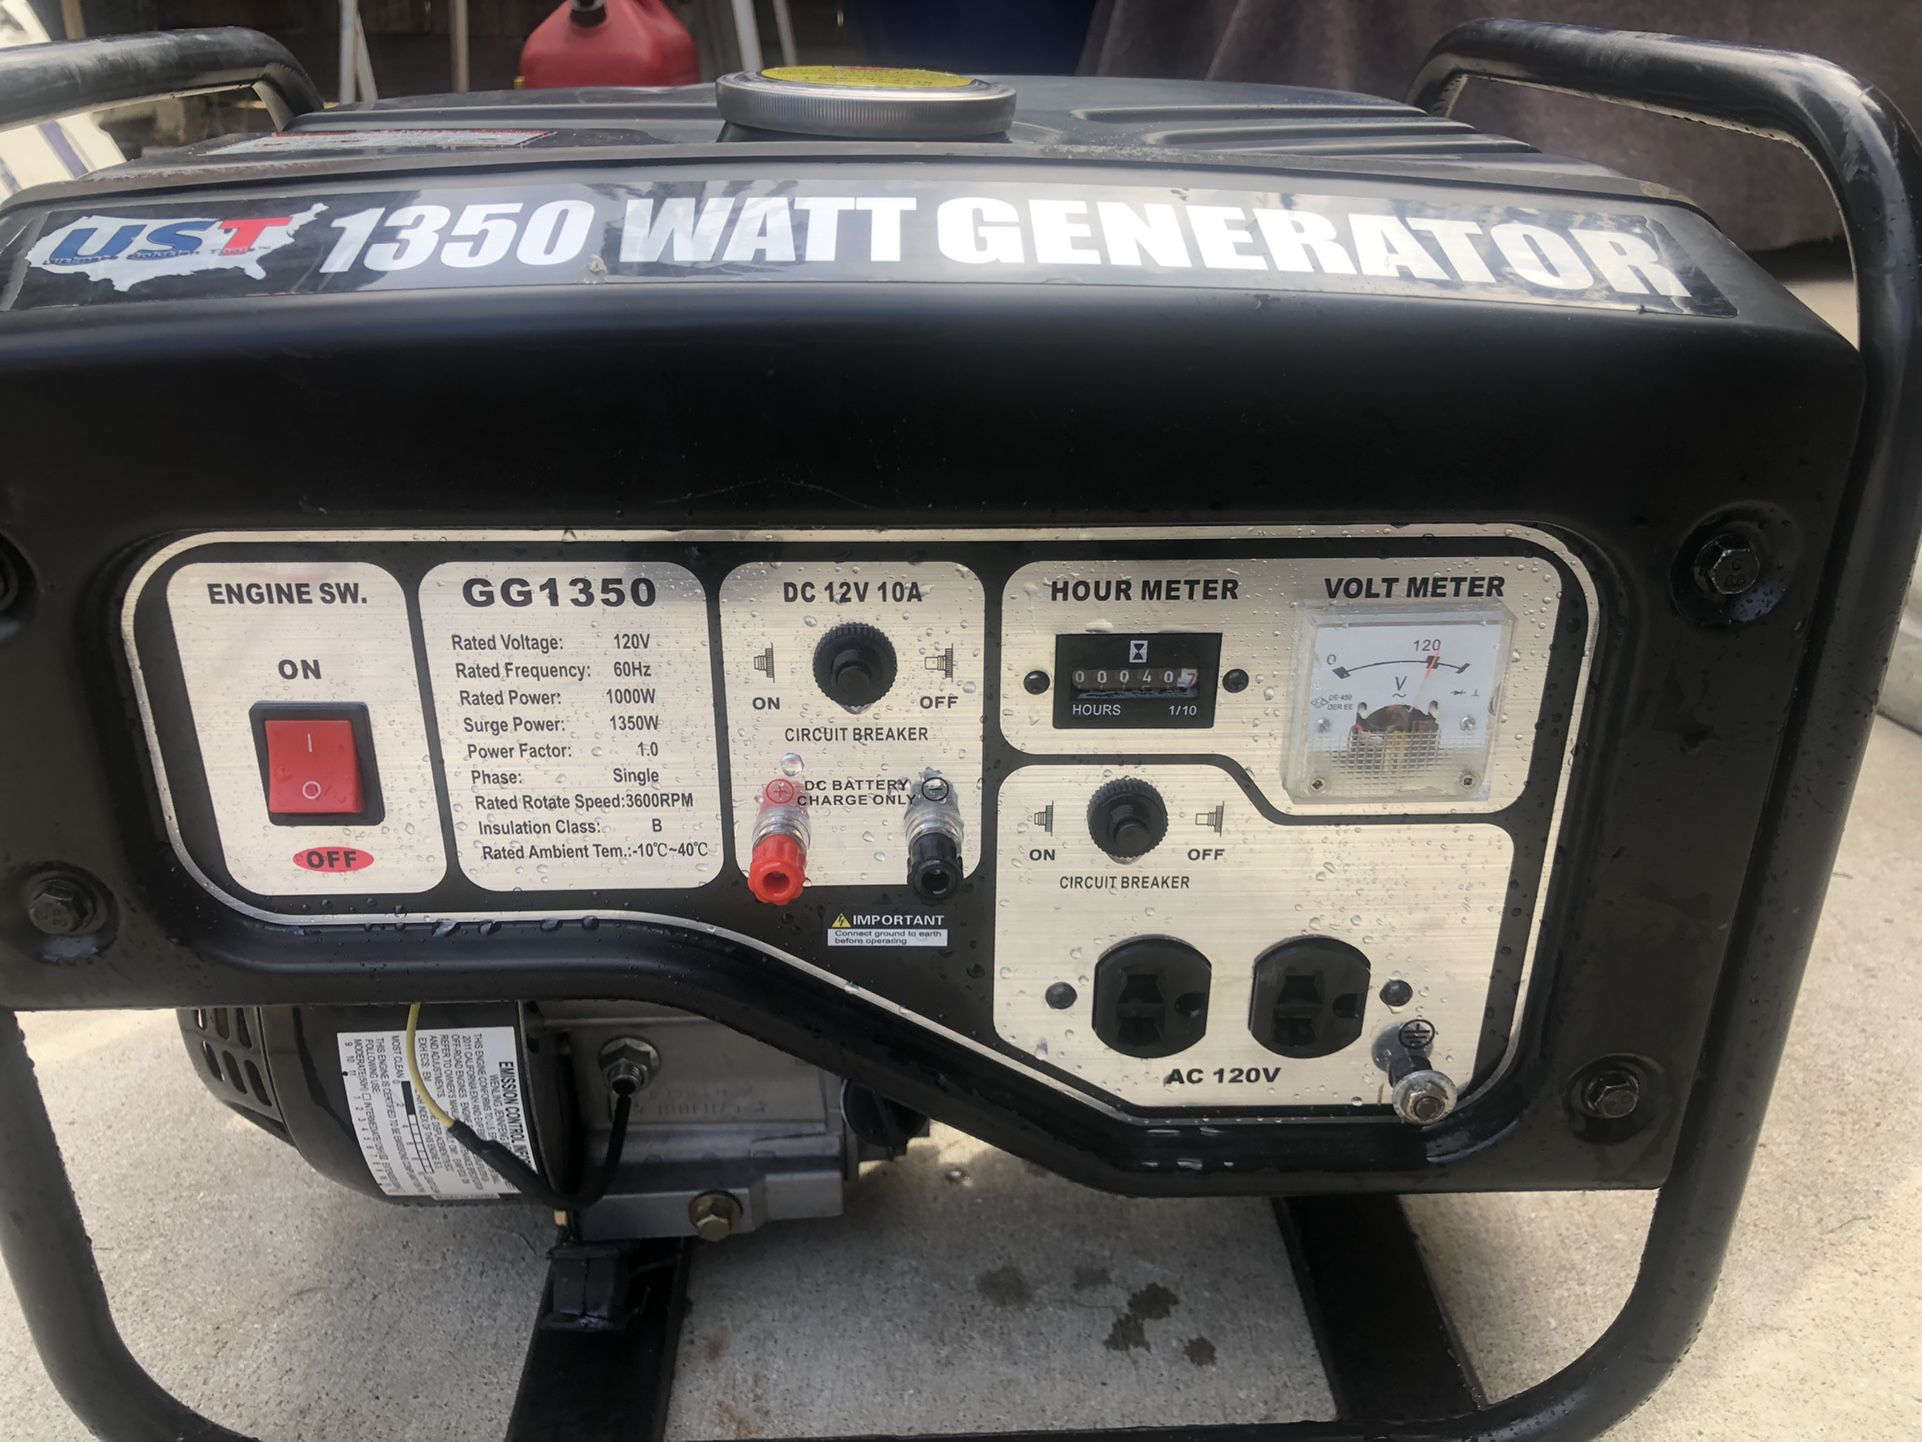 Little generator